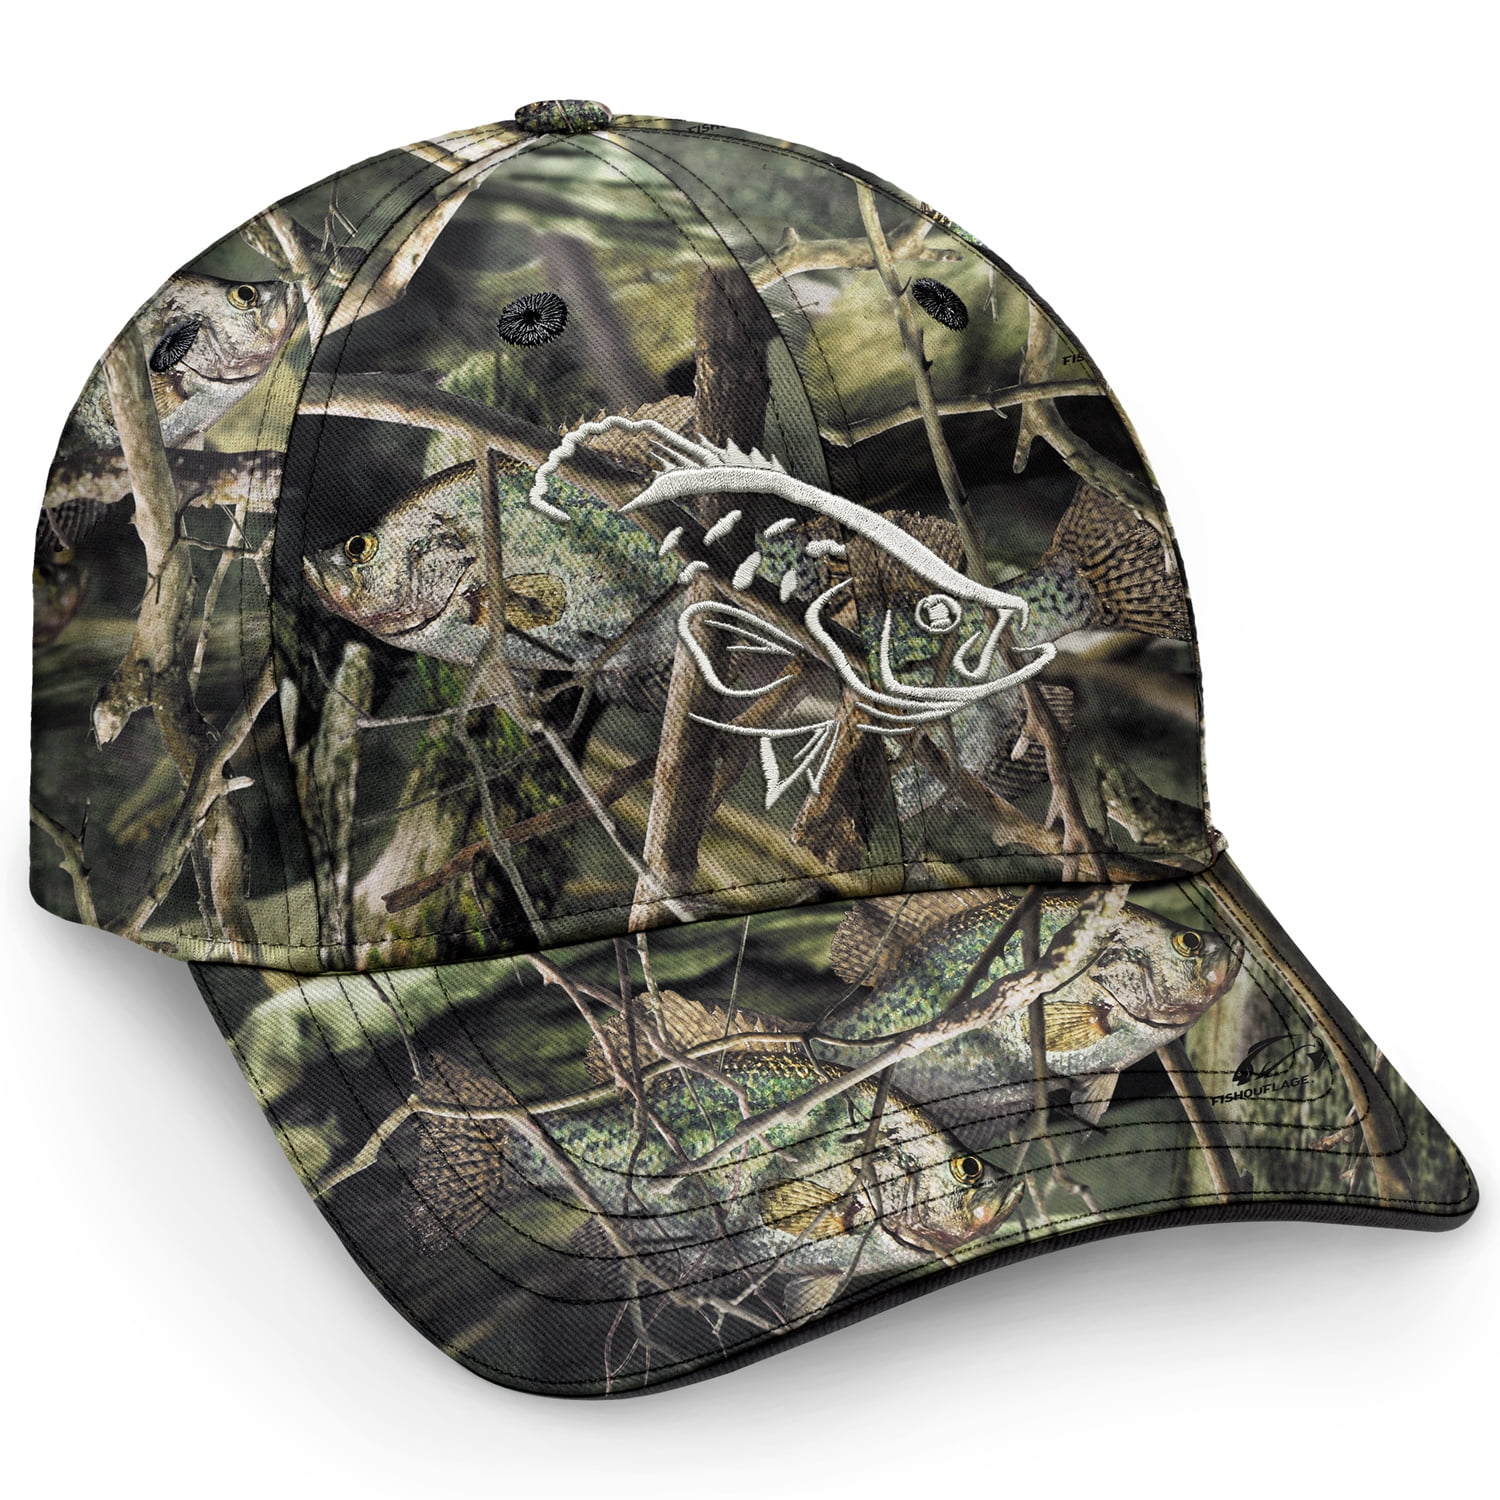 Fishouflage Camo Strike Cap- Crappie Fishing Hat (One Size)